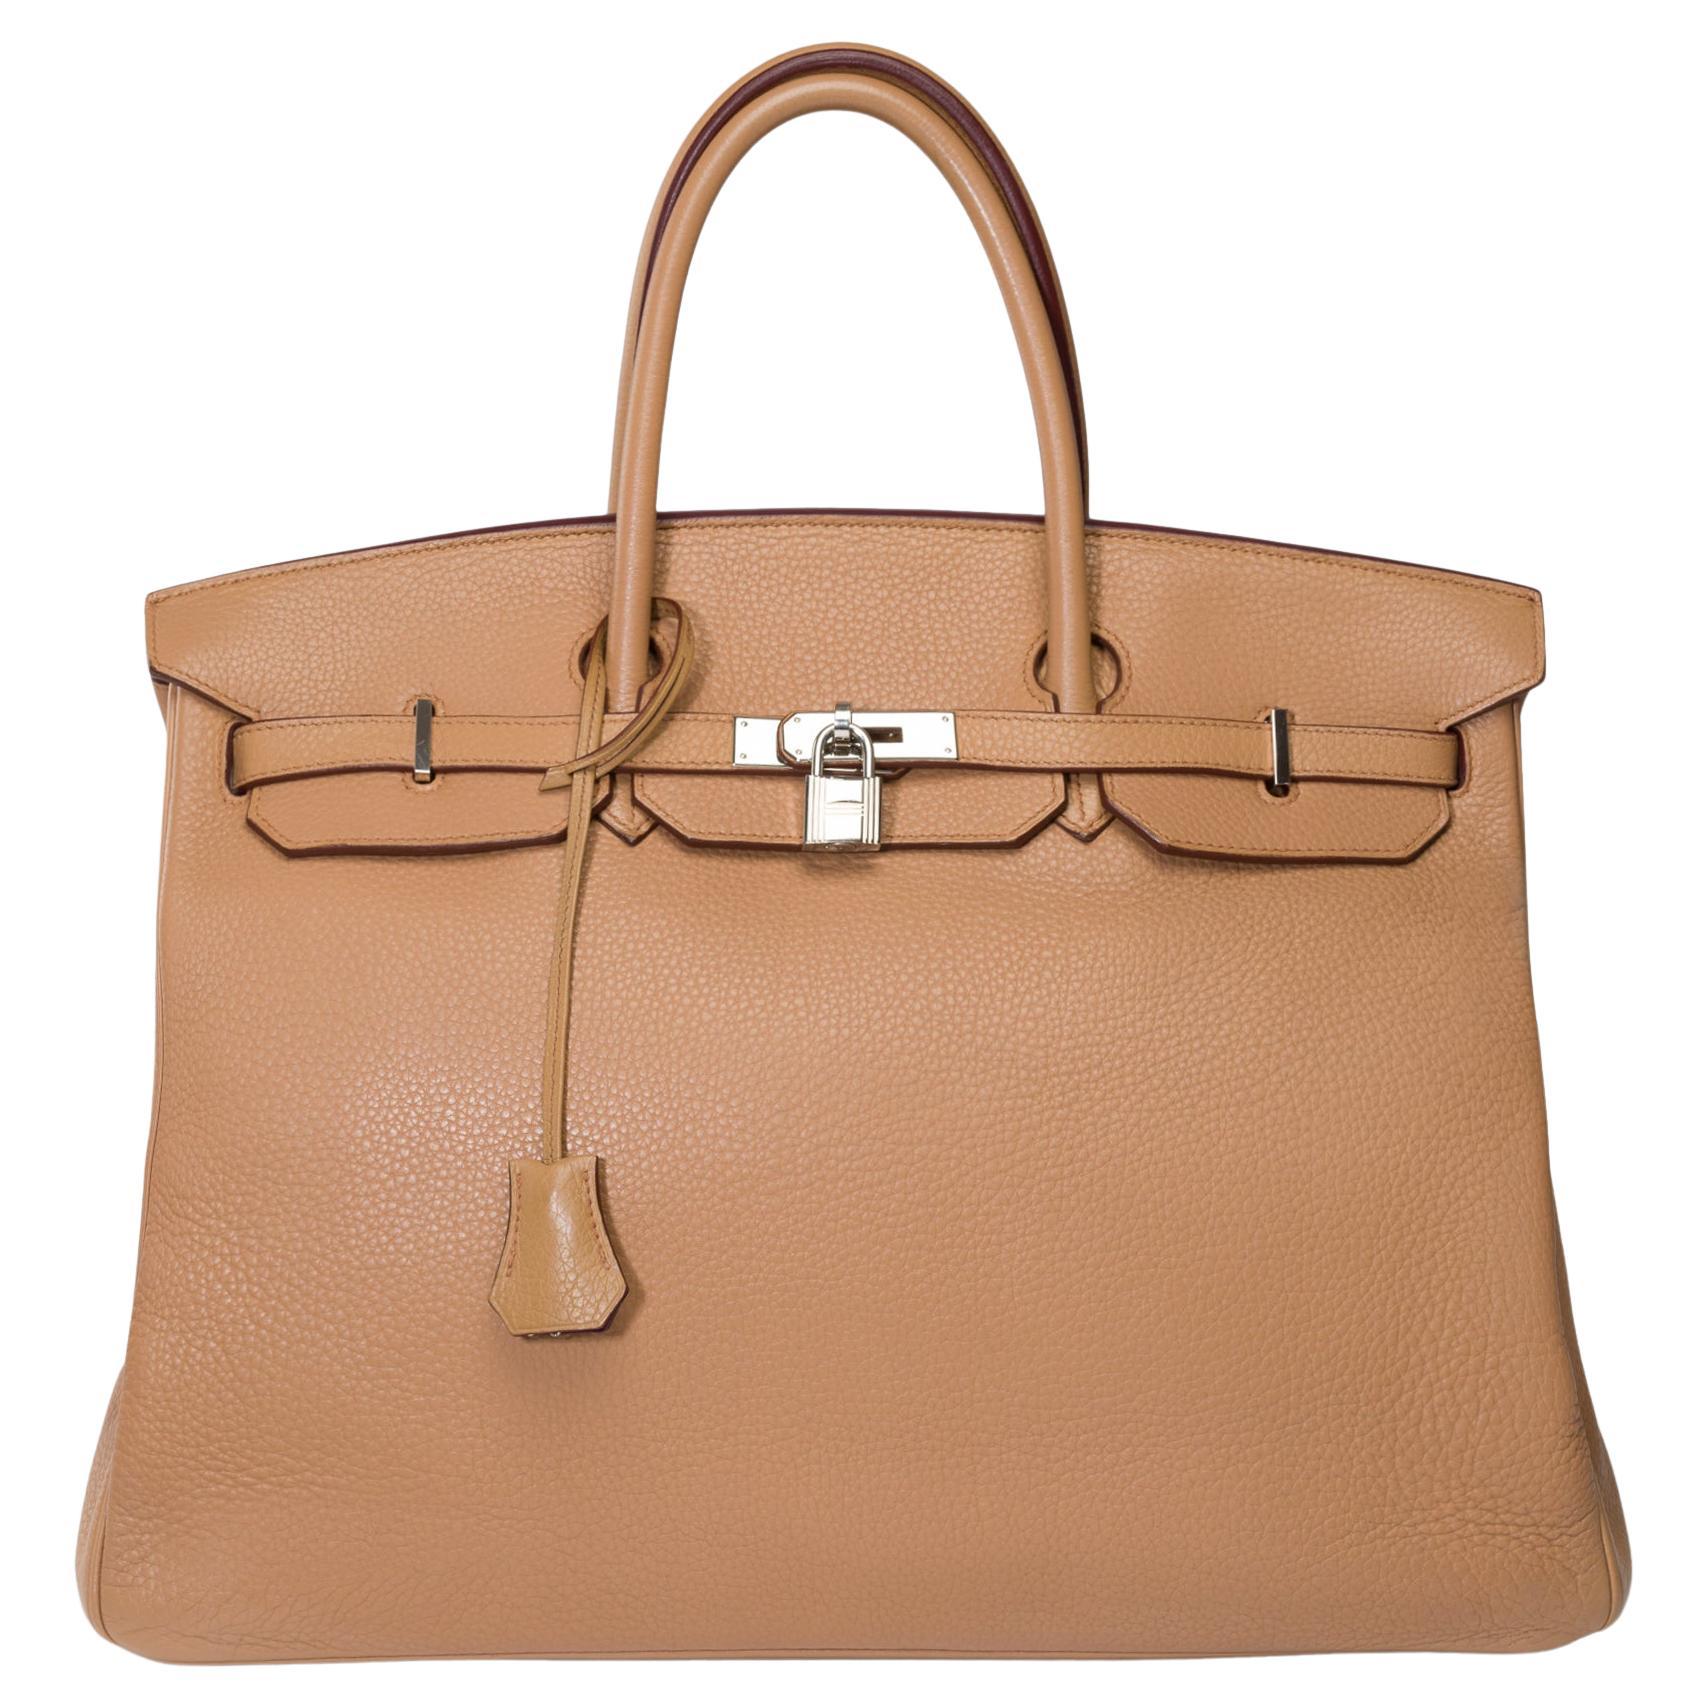 Hermes Birkin 40 handbag in Tabac Togo leather, SHW